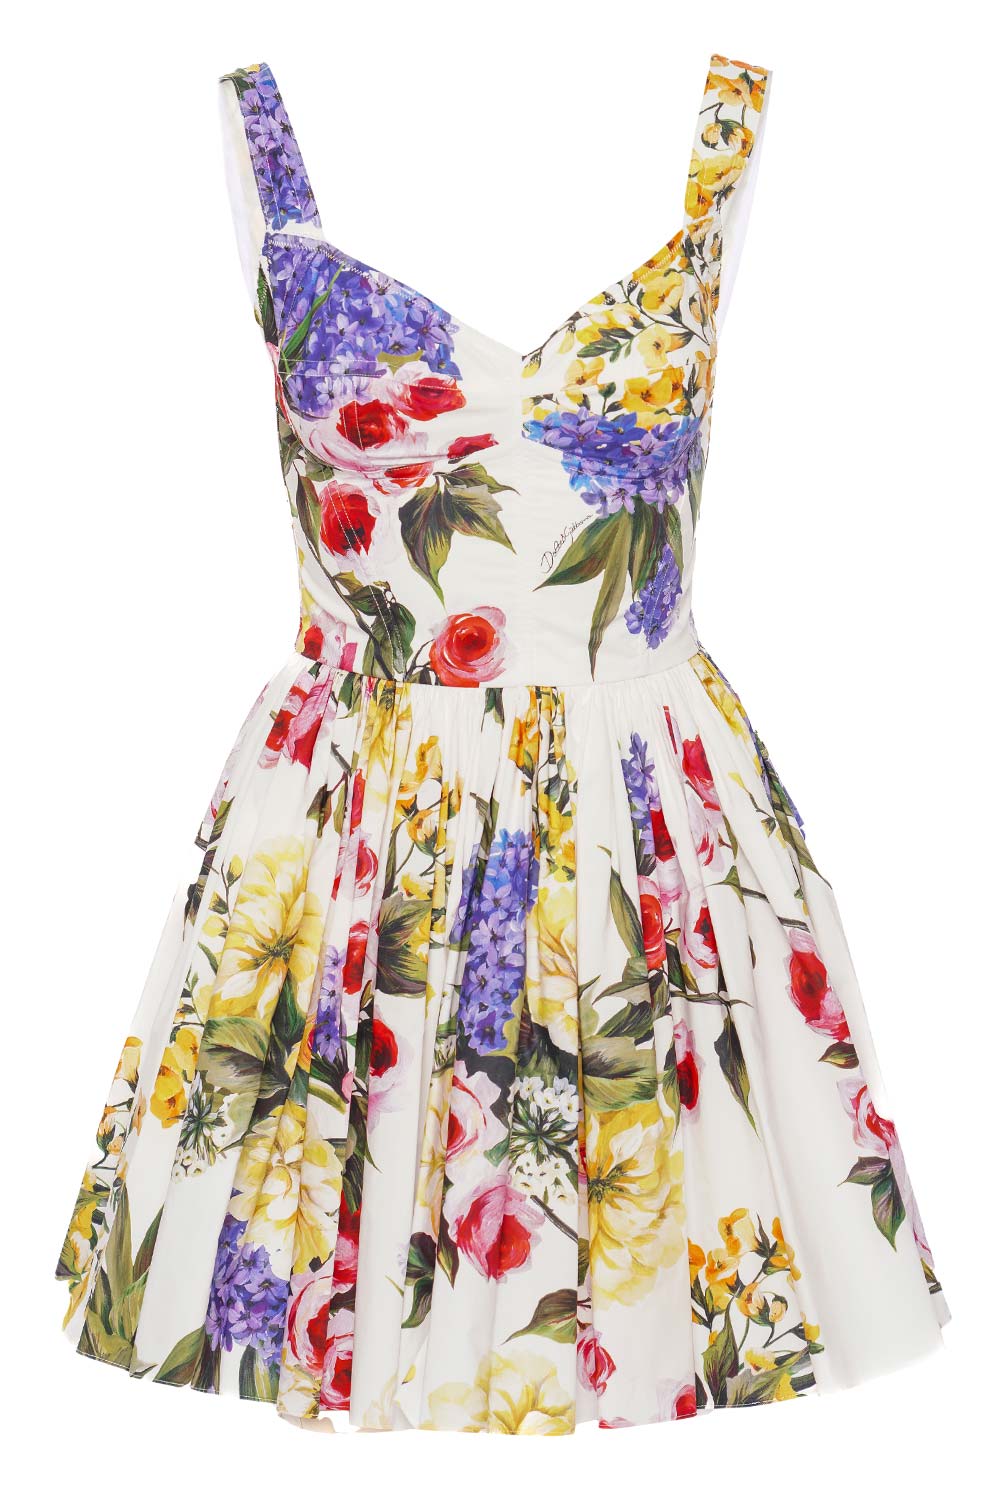 Dolce & Gabbana Flower Power Bustier Mini Dress